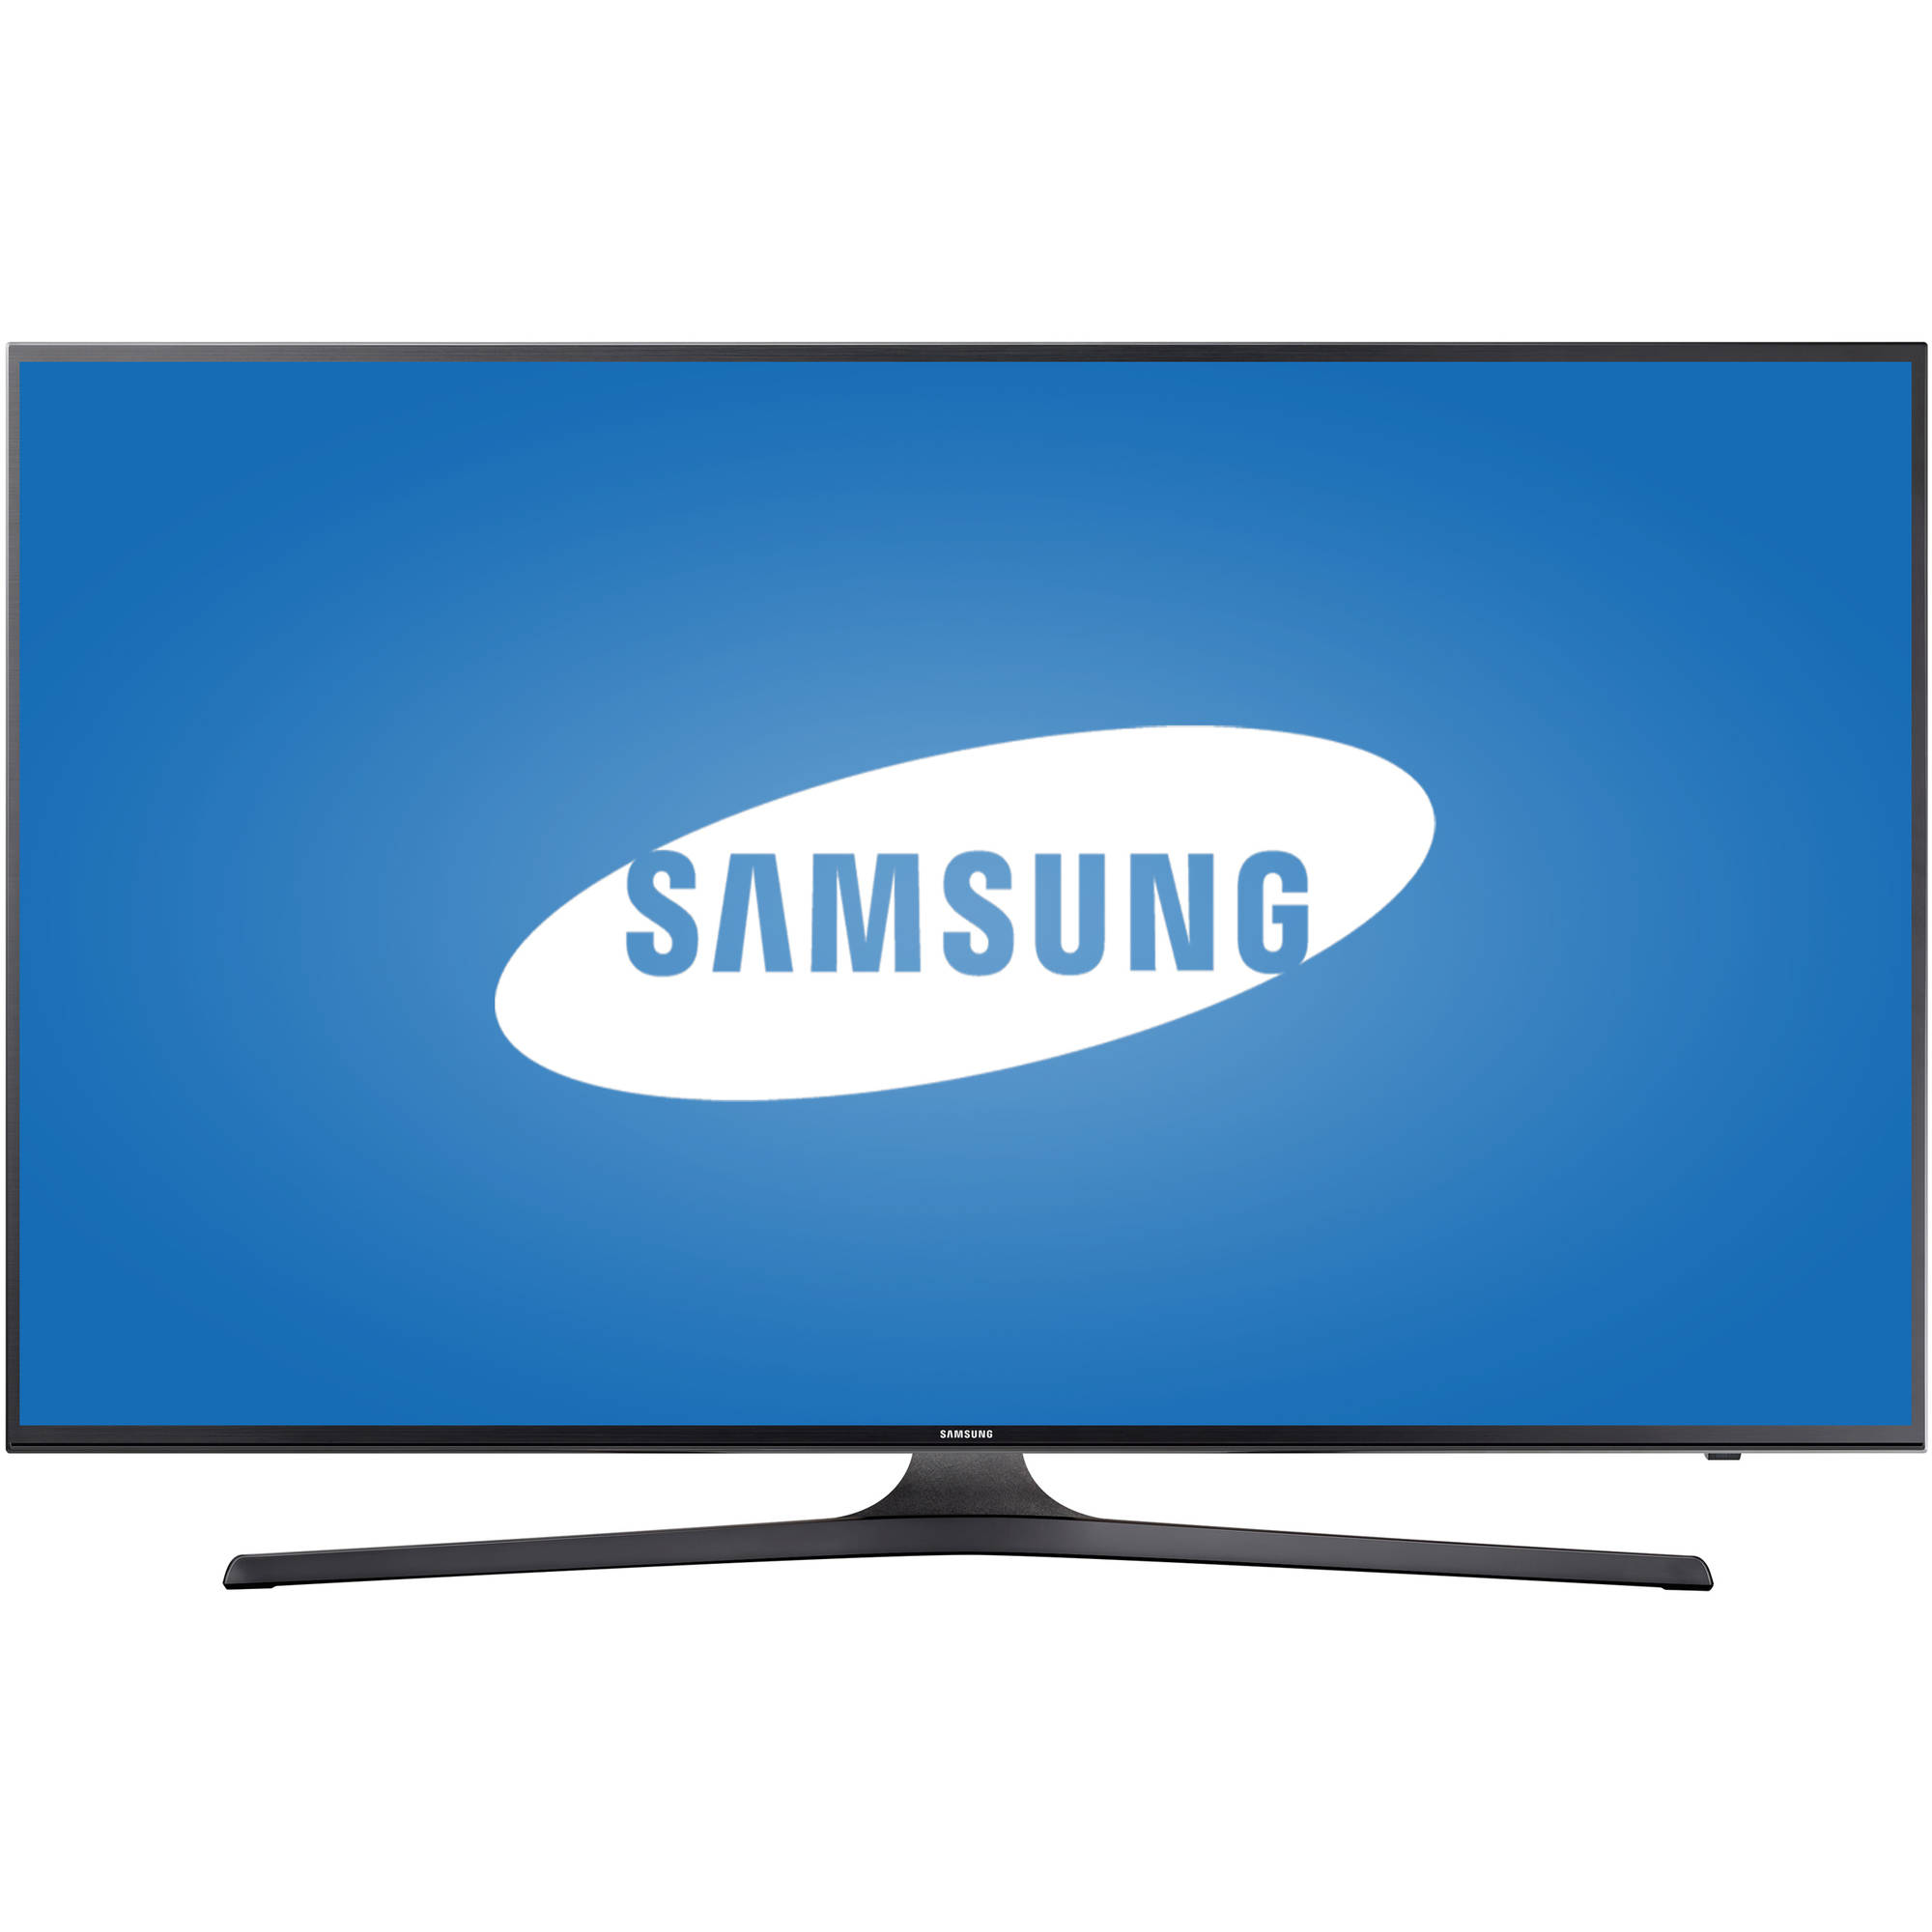 Samsung UN65KU6300 65 inch Smart 4K Ultra HD Motion Rate 120 LED UHDTV - image 9 of 9